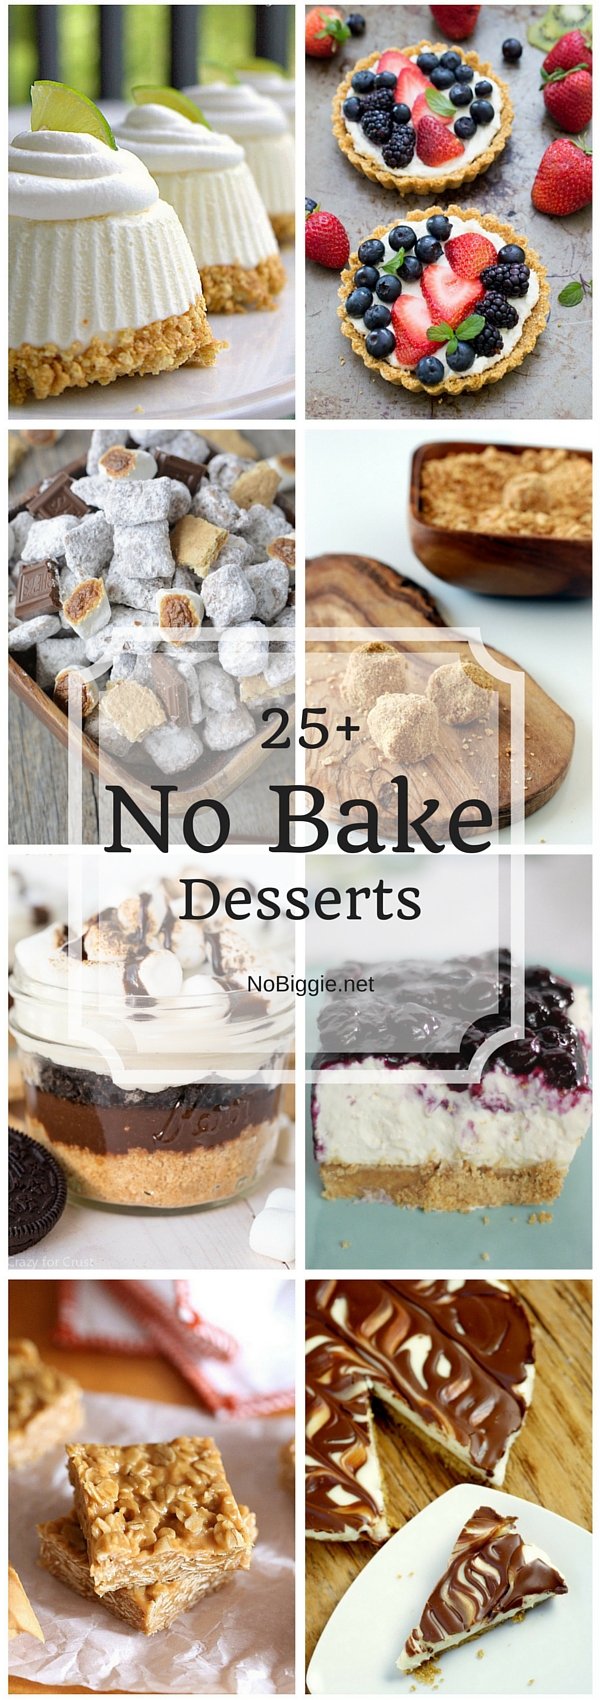 http://www.nobiggie.net/wp-content/uploads/2016/02/25-No-Bake-Desserts-NoBiggie.net-1-1.jpg